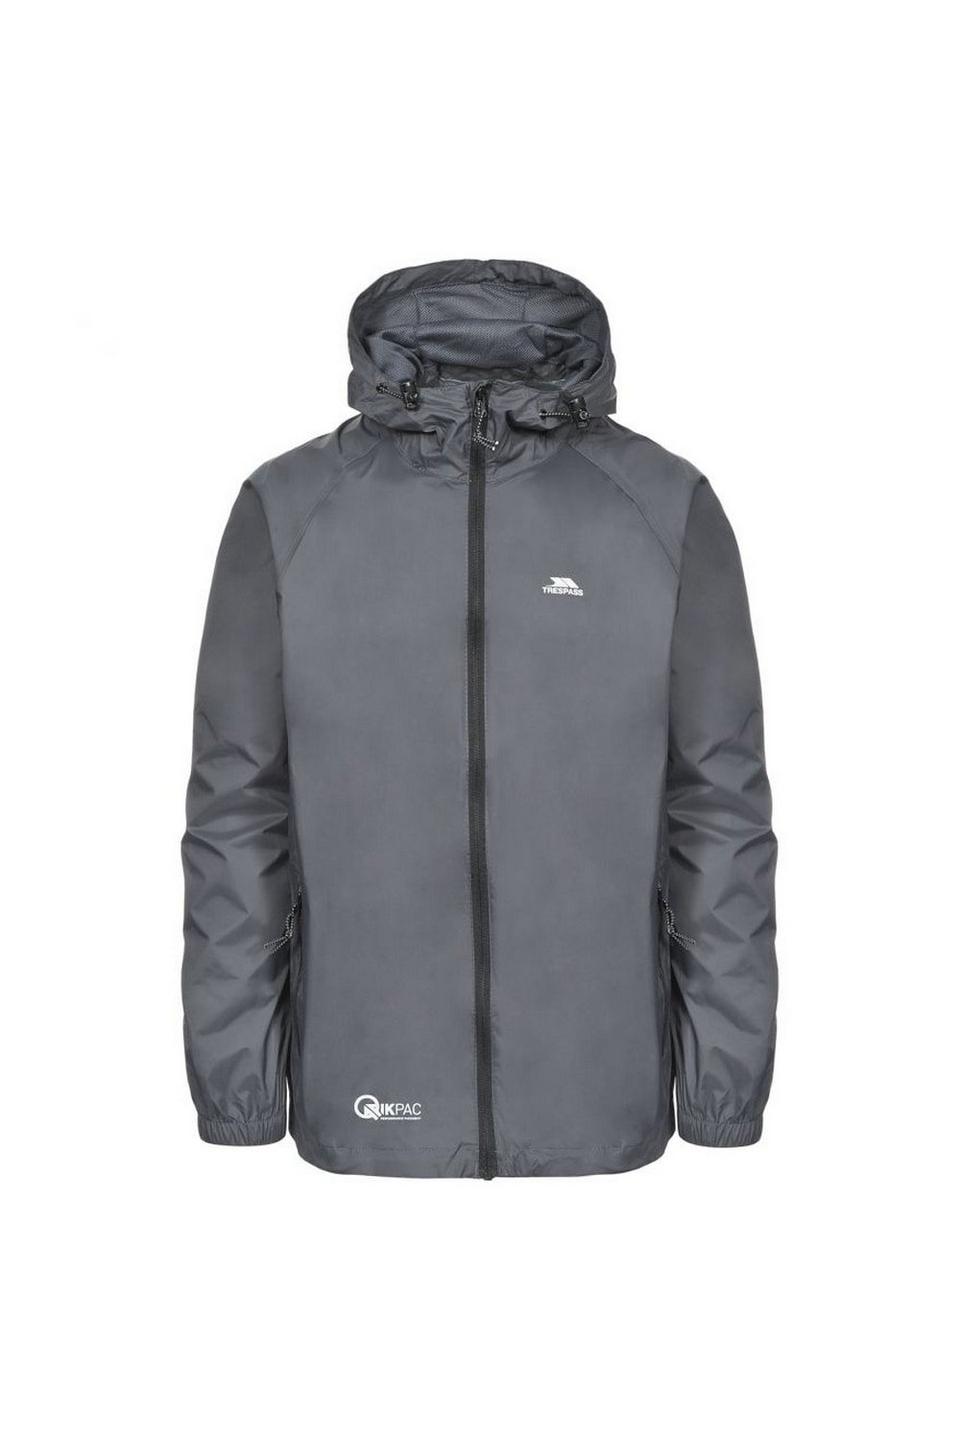 Jackets & Coats | Qikpac Packaway Waterproof Jacket | Trespass